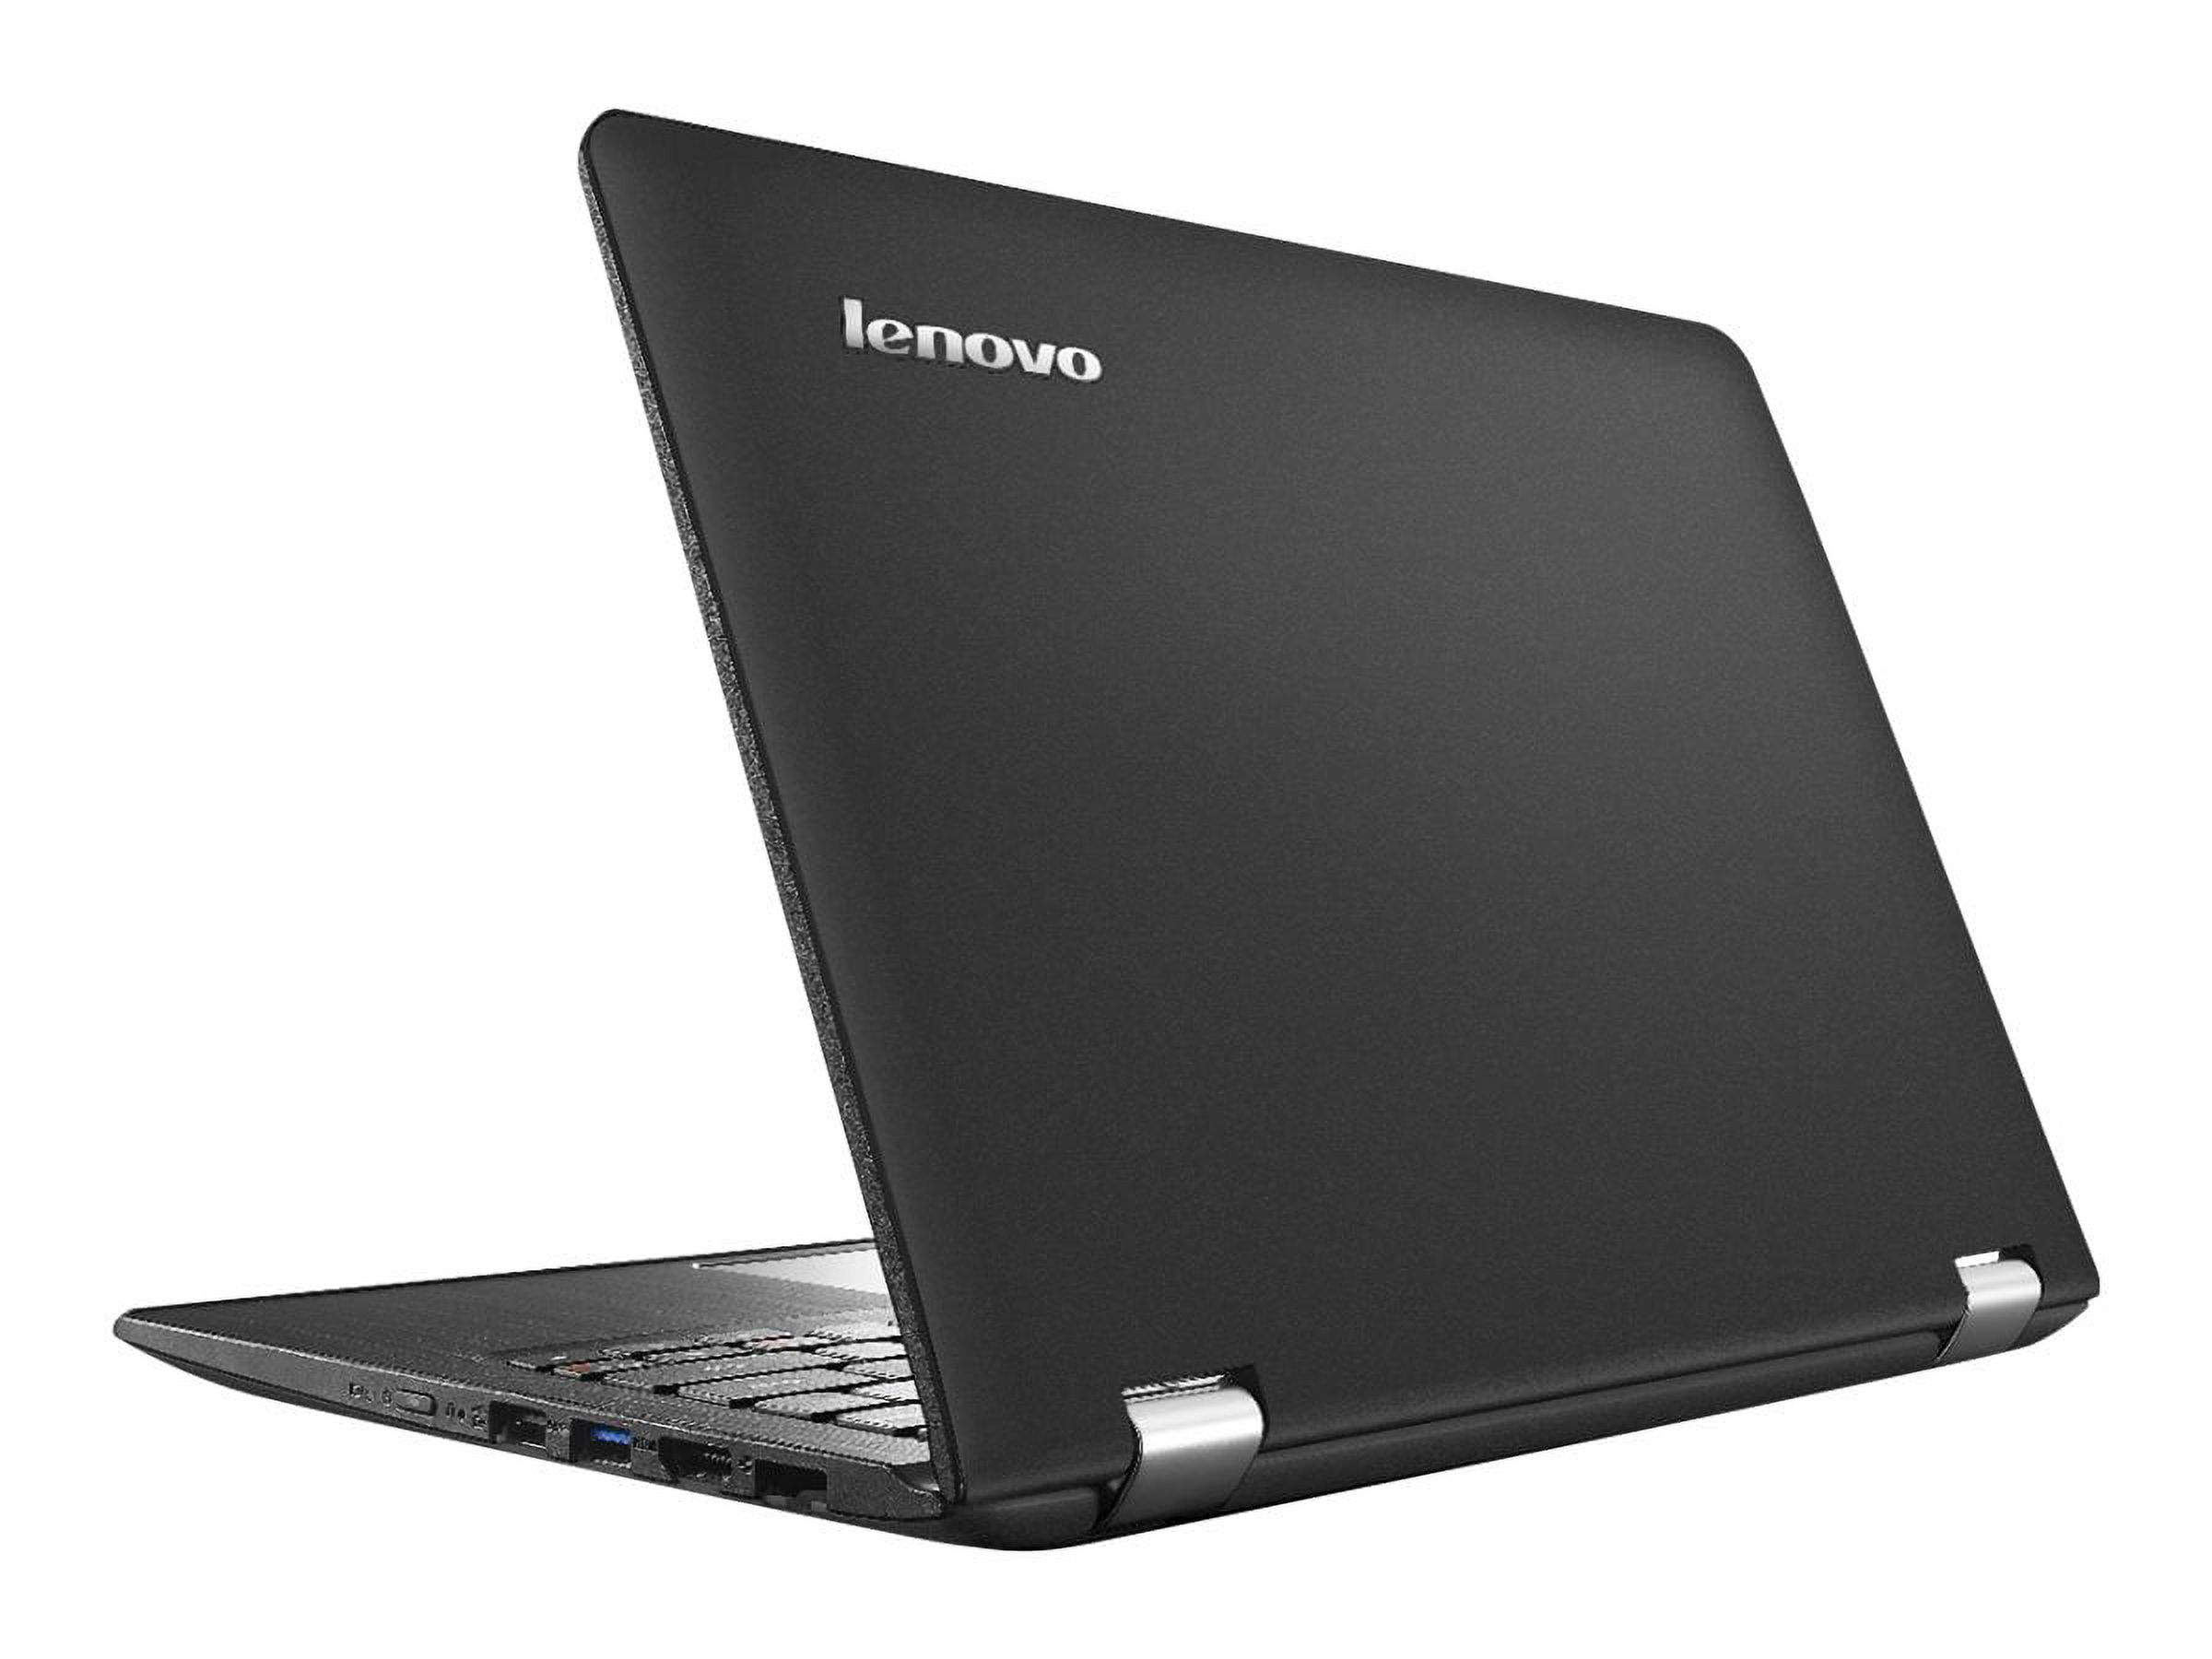 Lenovo Flex 3 1580 80R4 - Flip design - Intel Core i7 - 6500U / up to 3.1 GHz - Win 10 Home 64-bit - GF 940M  - 8 GB RAM - 1 TB HDD - 15.6" IPS touchscreen 1920 x 1080 (Full HD) - Wi-Fi 5 - black - kbd: US - image 3 of 5